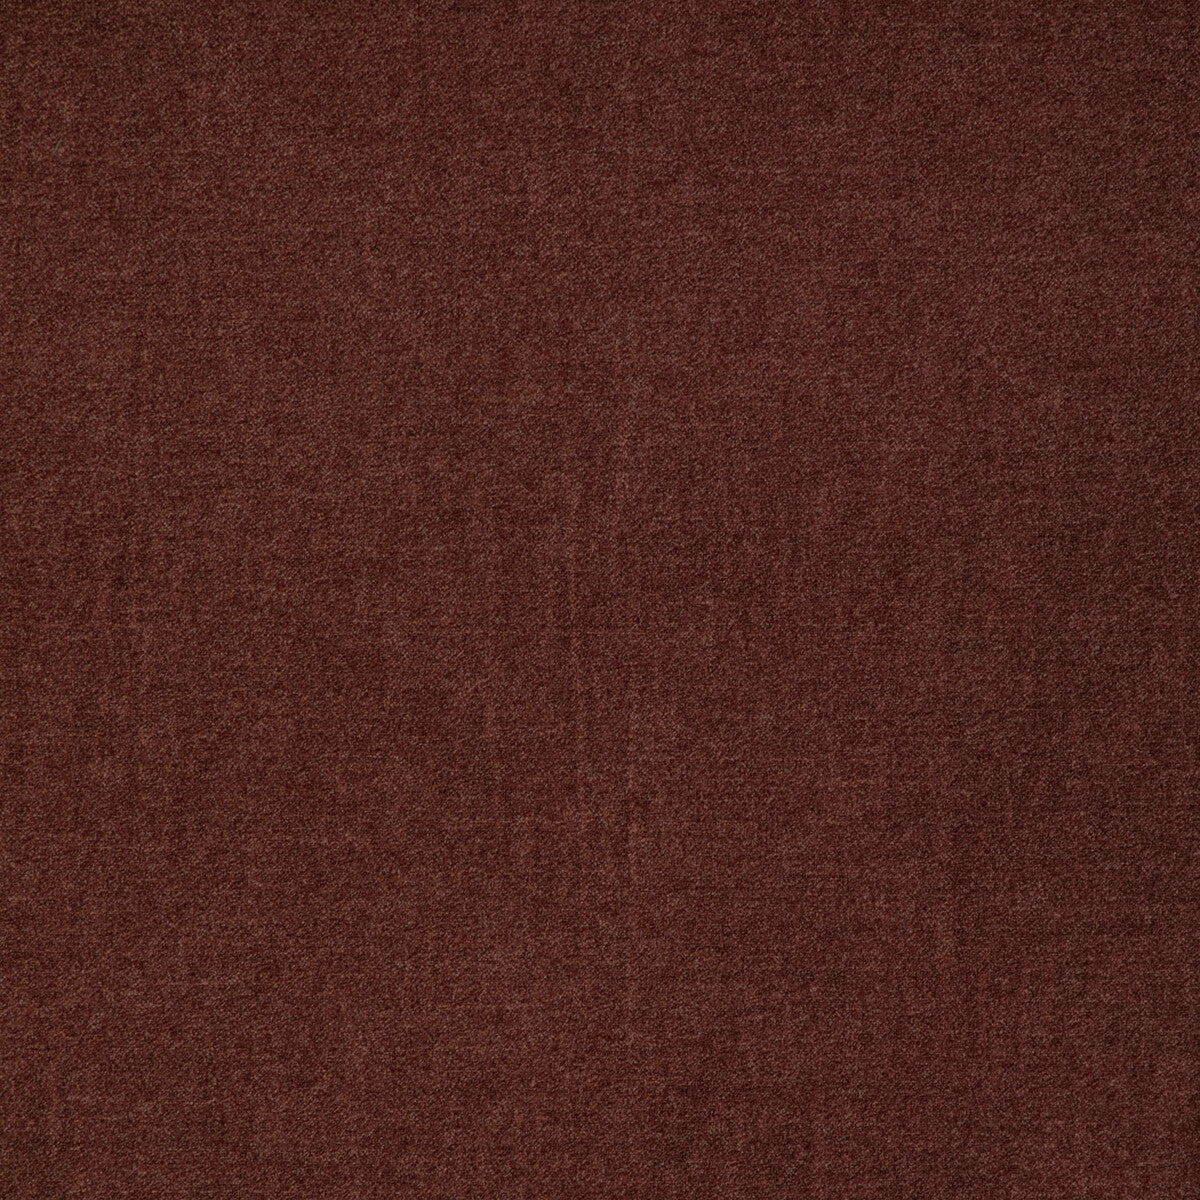 Kravet Smart fabric in 37000-724 color - pattern 37000.724.0 - by Kravet Smart in the Performance Kravetarmor collection